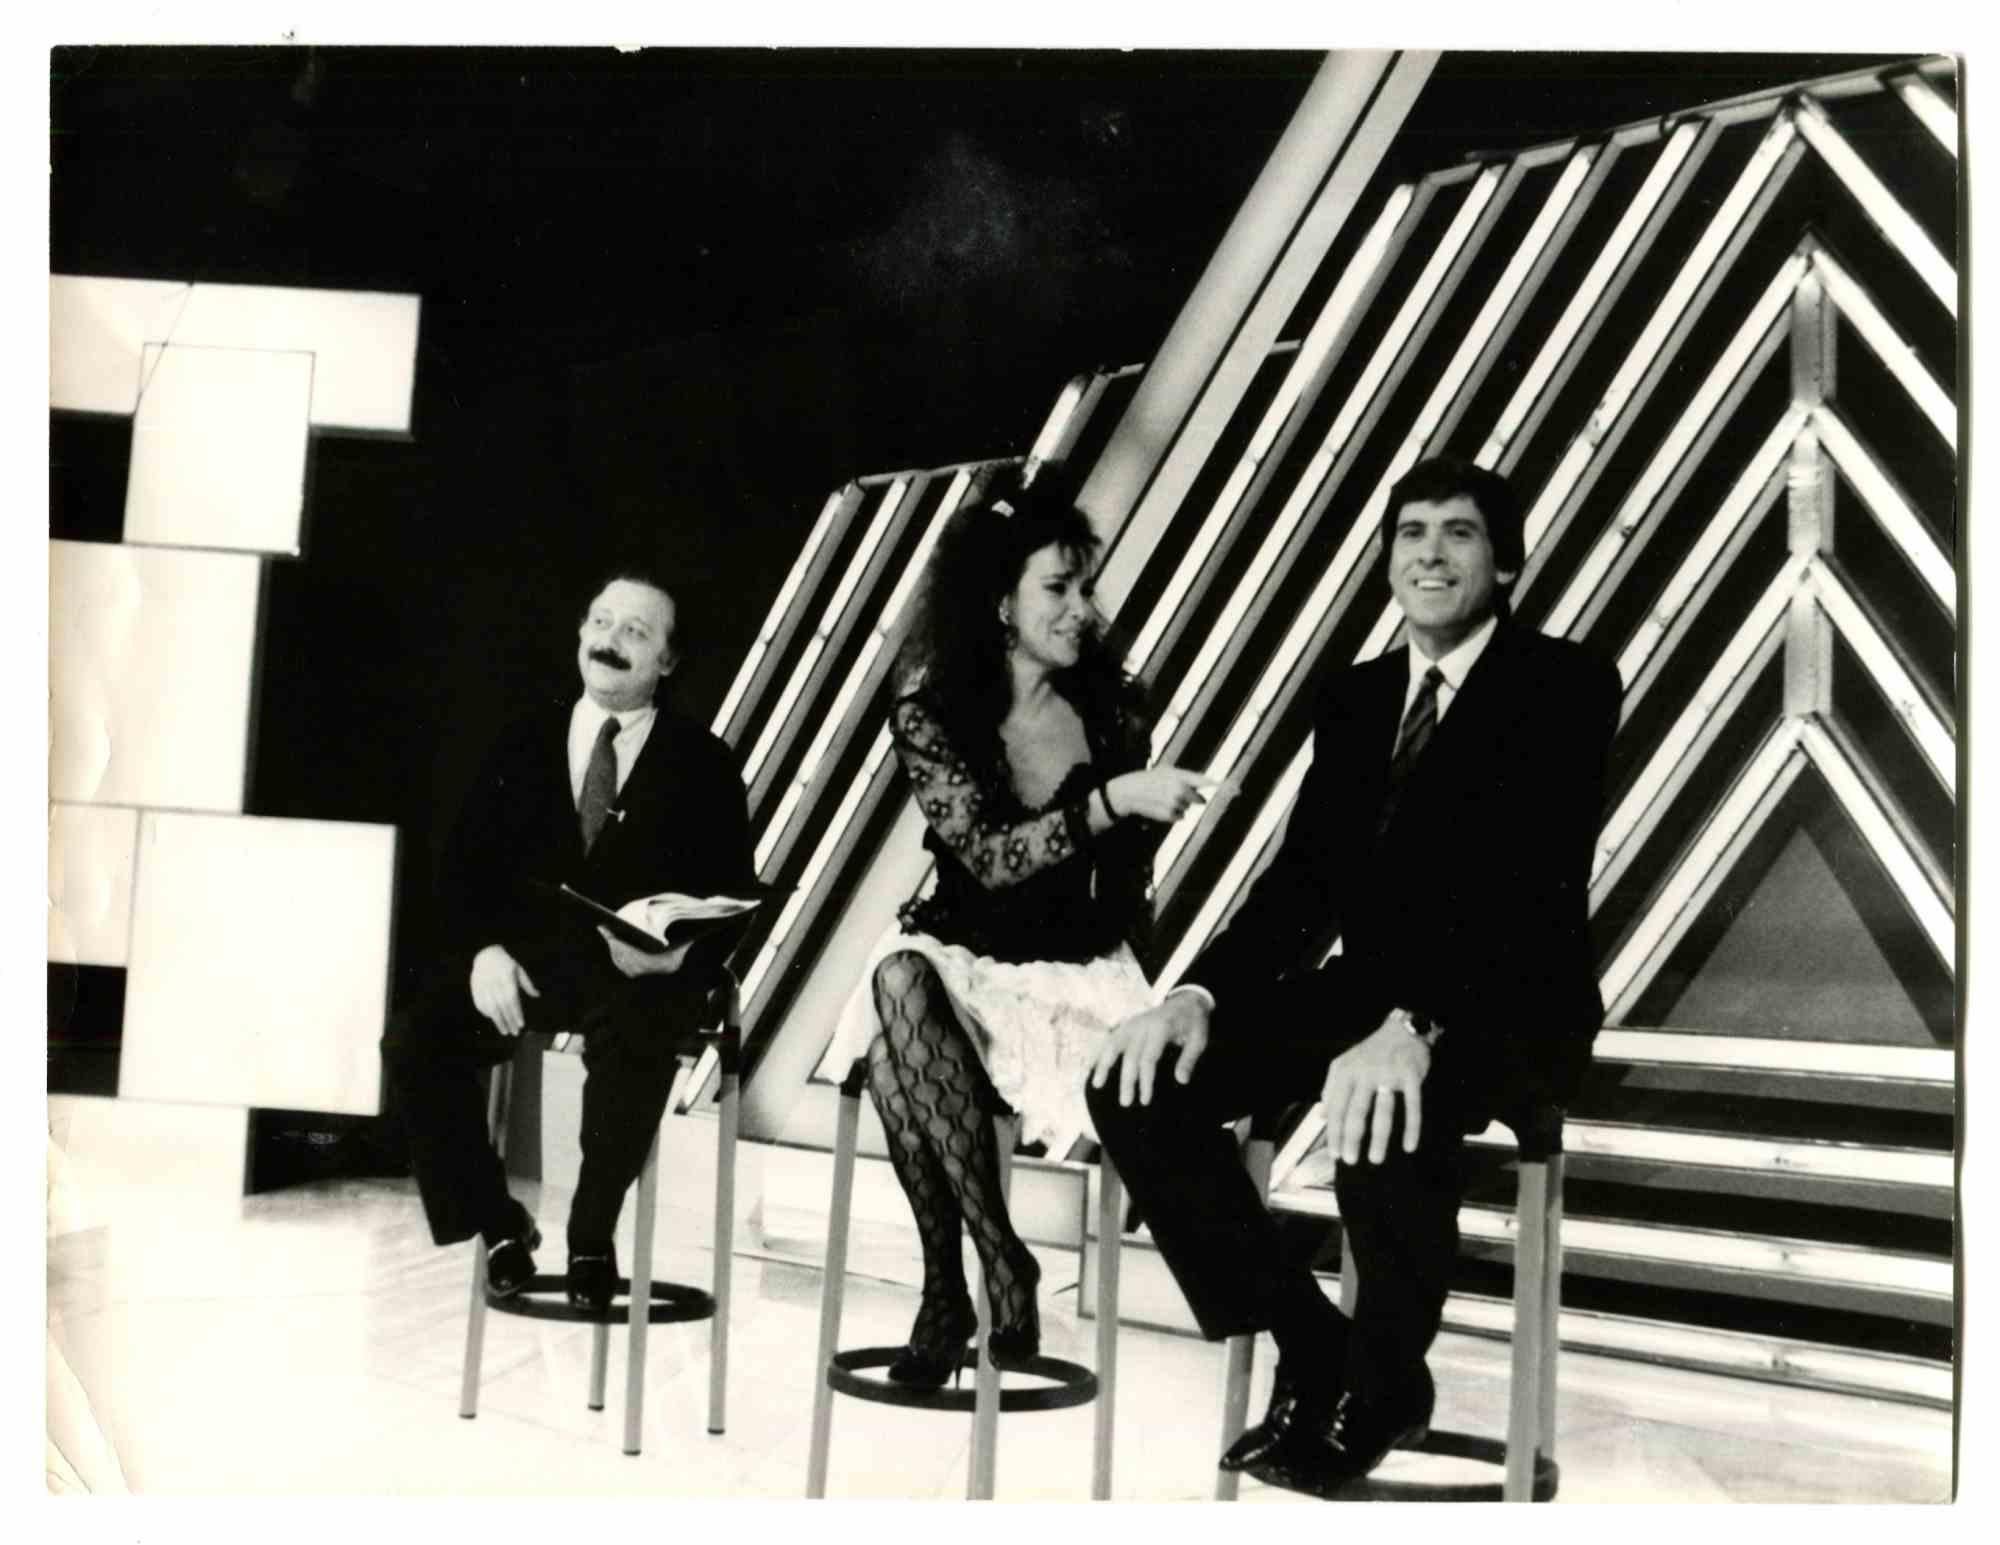 Gianni Minà, Ana Obregon and Gianni Morandi - Photo - 1980s